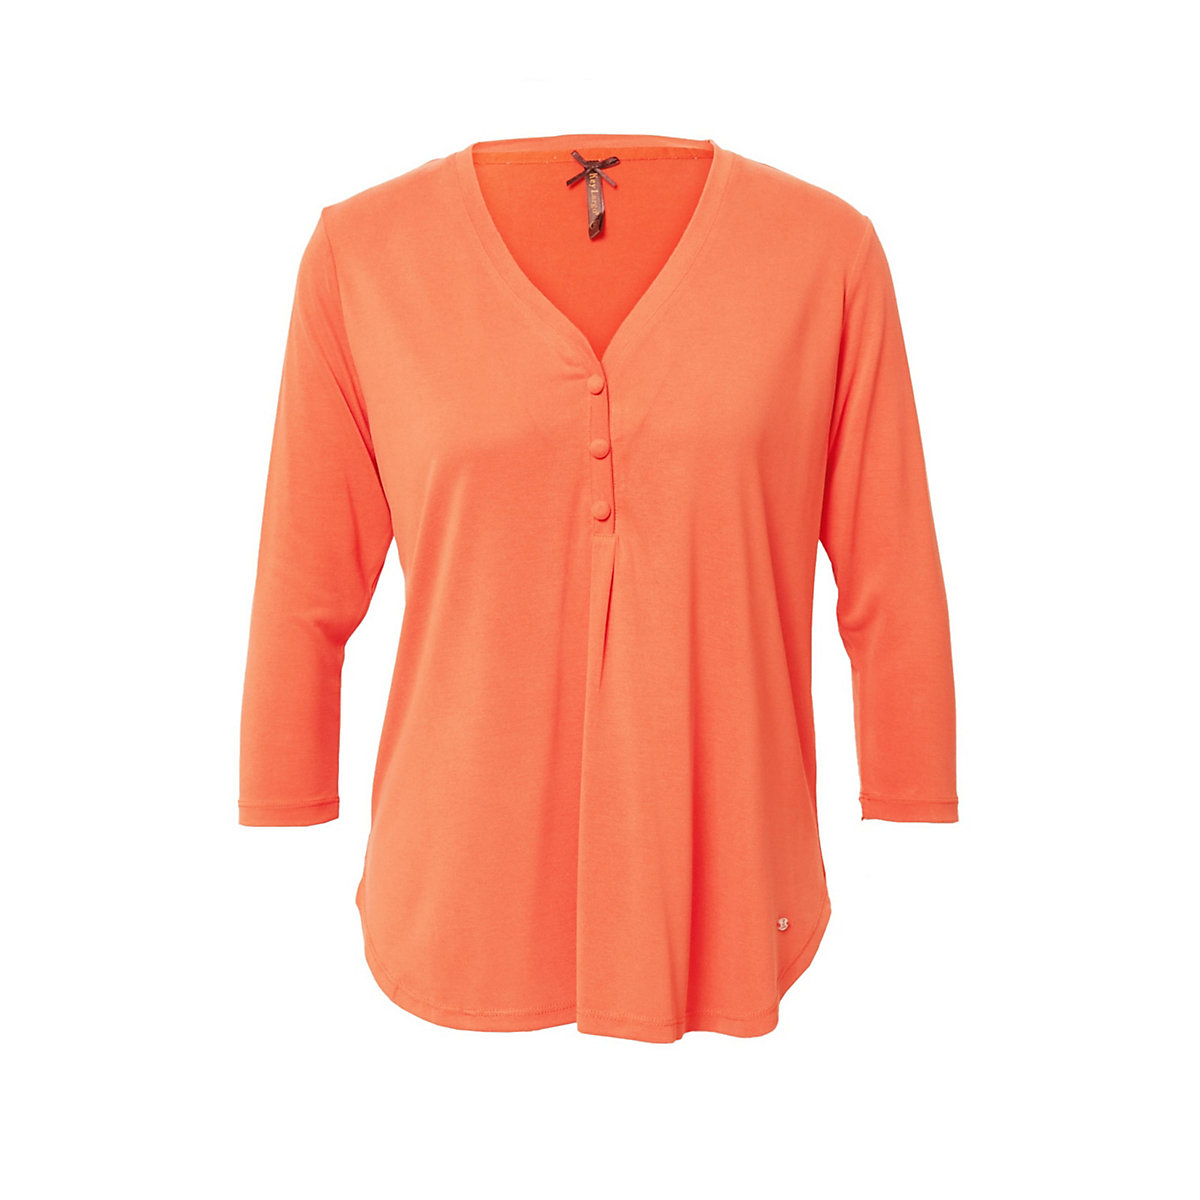 KEY LARGO Shirt Vicky orange